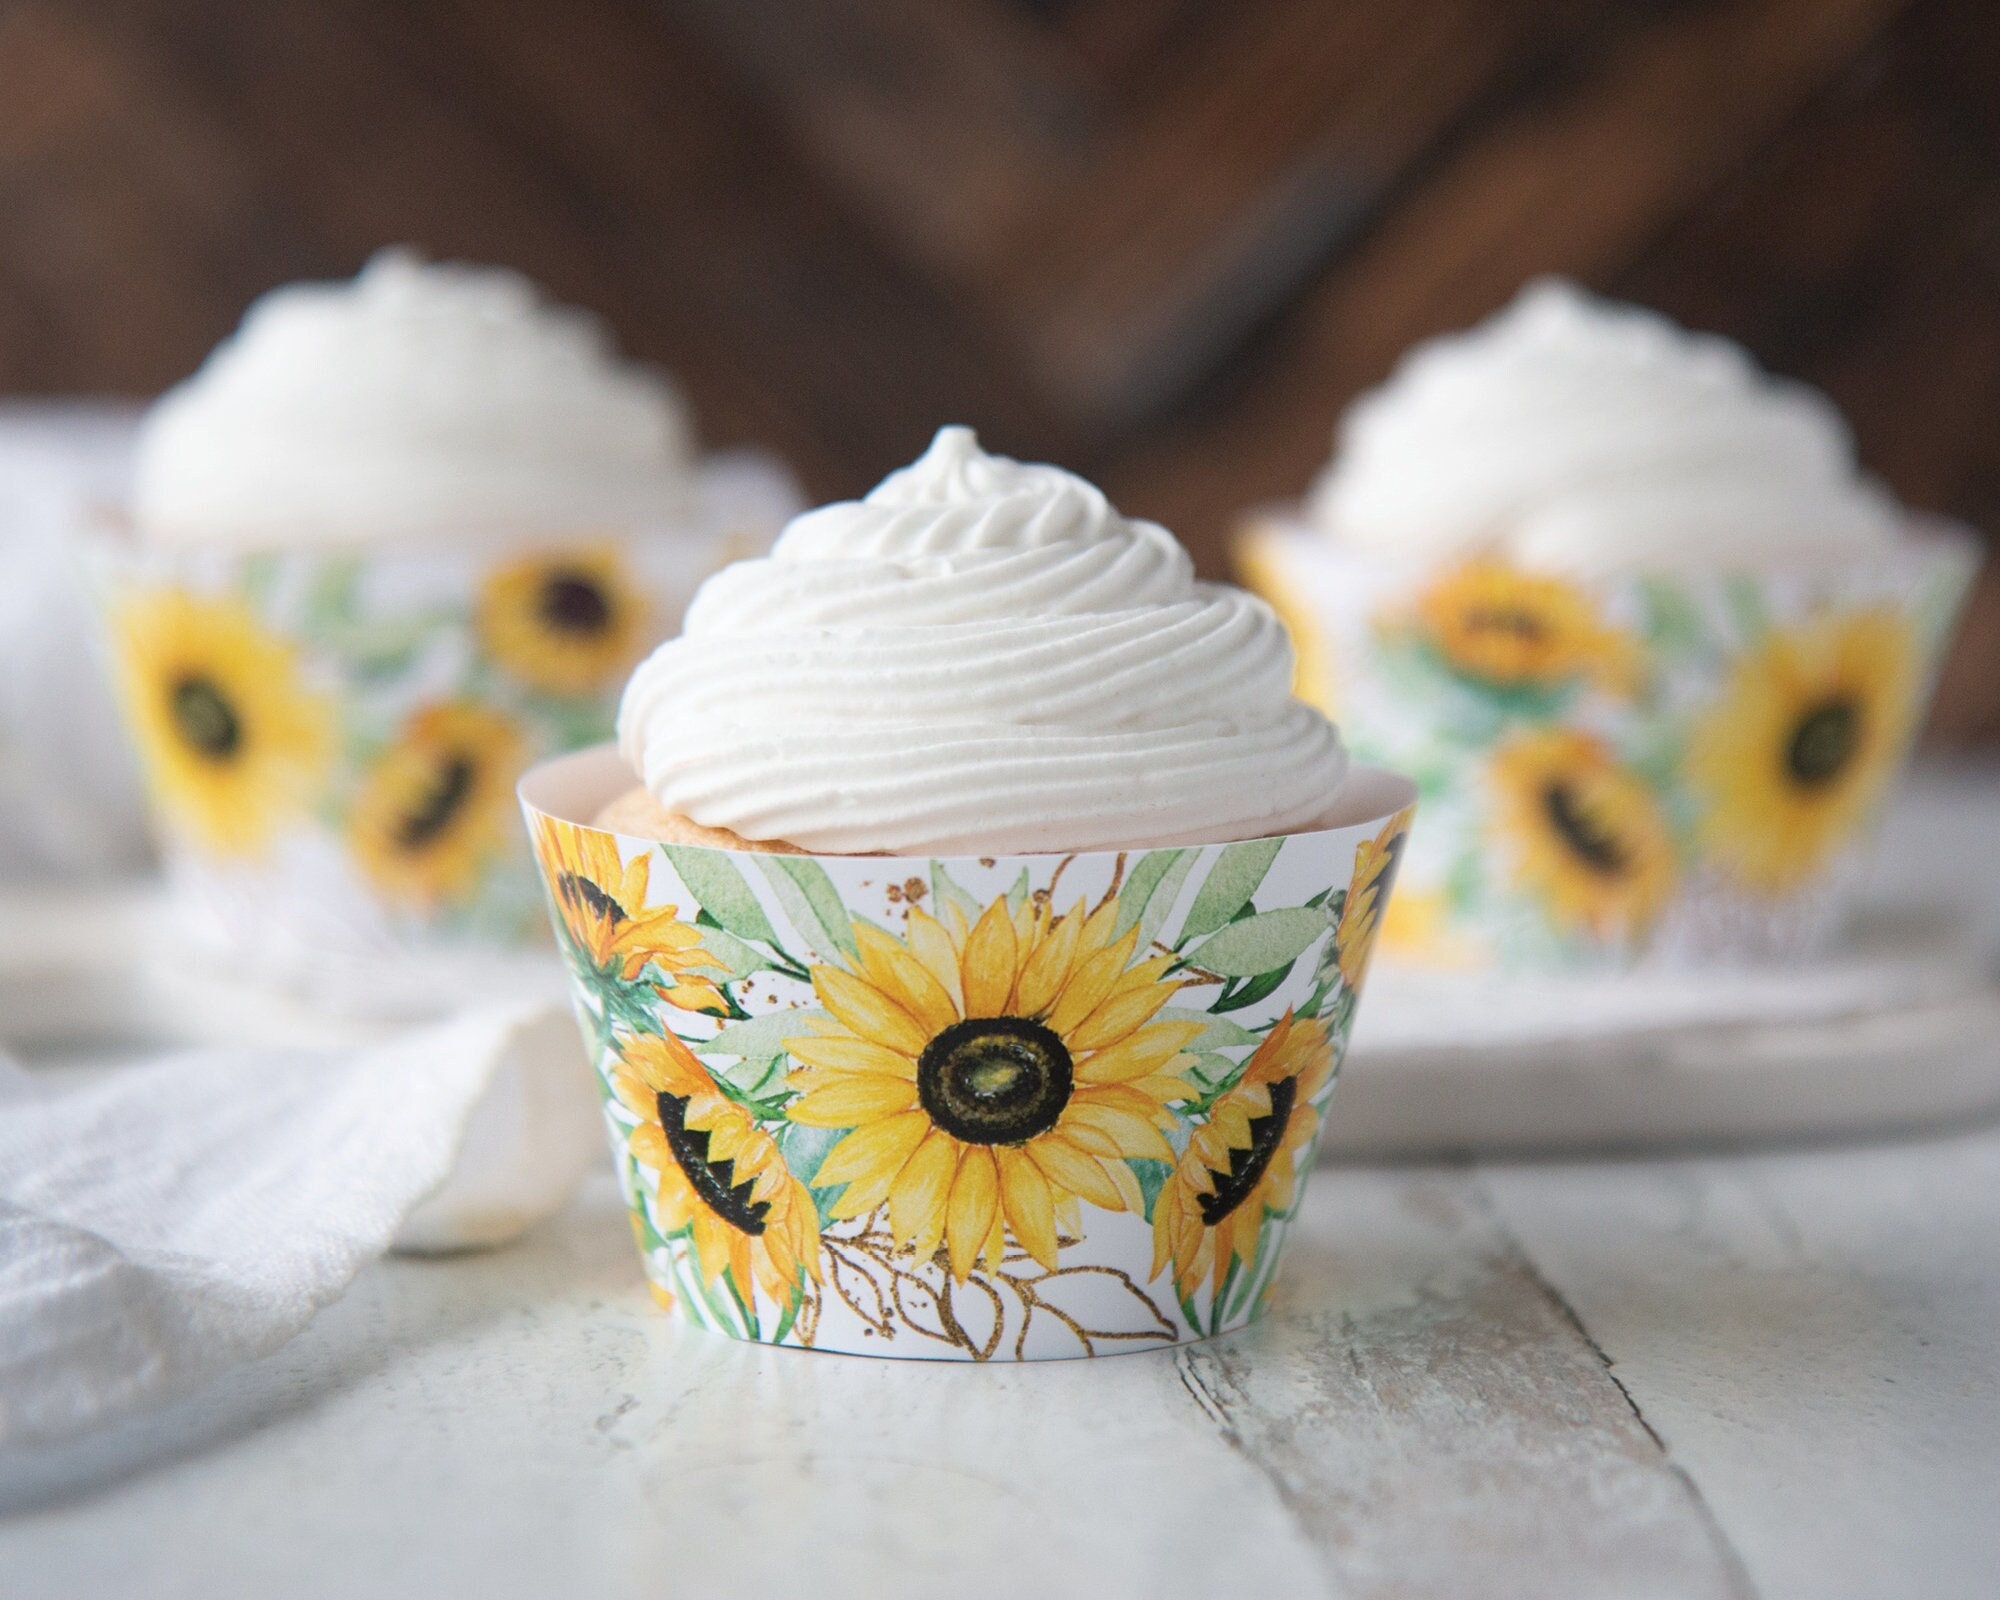 Shop Bulk Jumbo Cupcake Liners: Texas Size Wholesale Cupcake Liners –  Sprinkle Bee Sweet